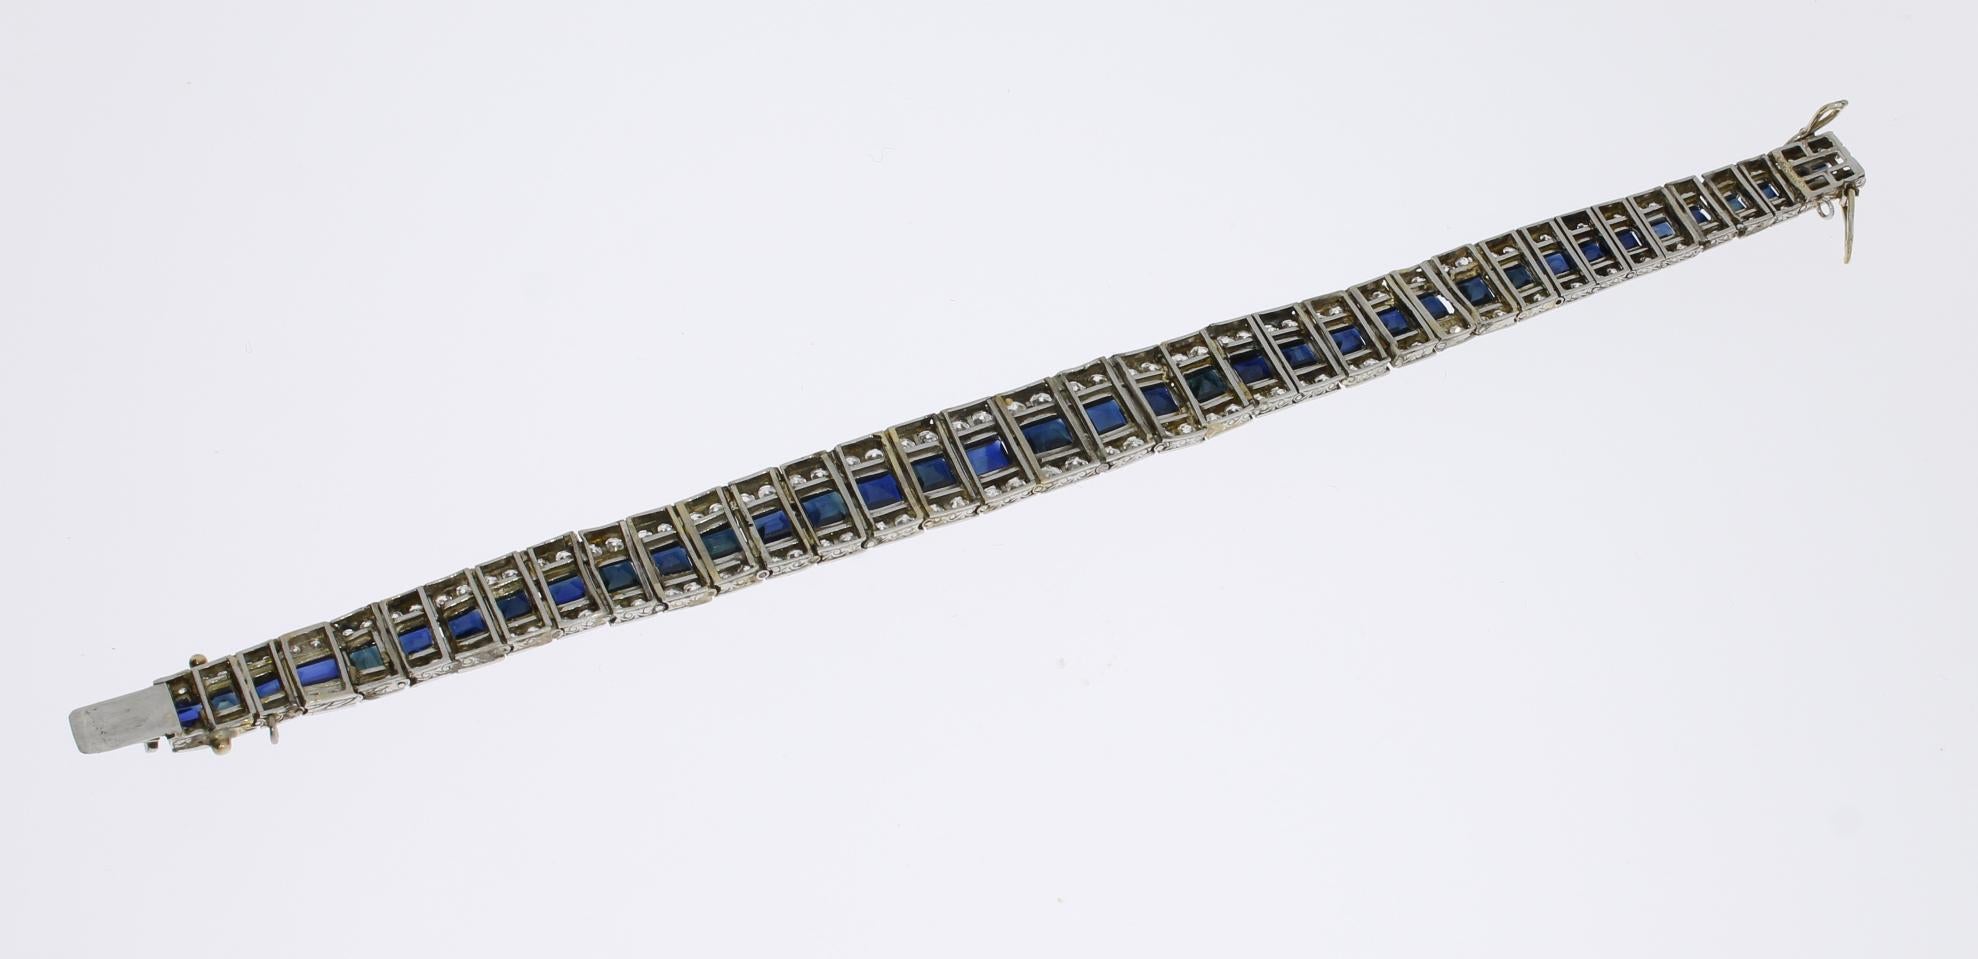 sapphire diamond tennis bracelet